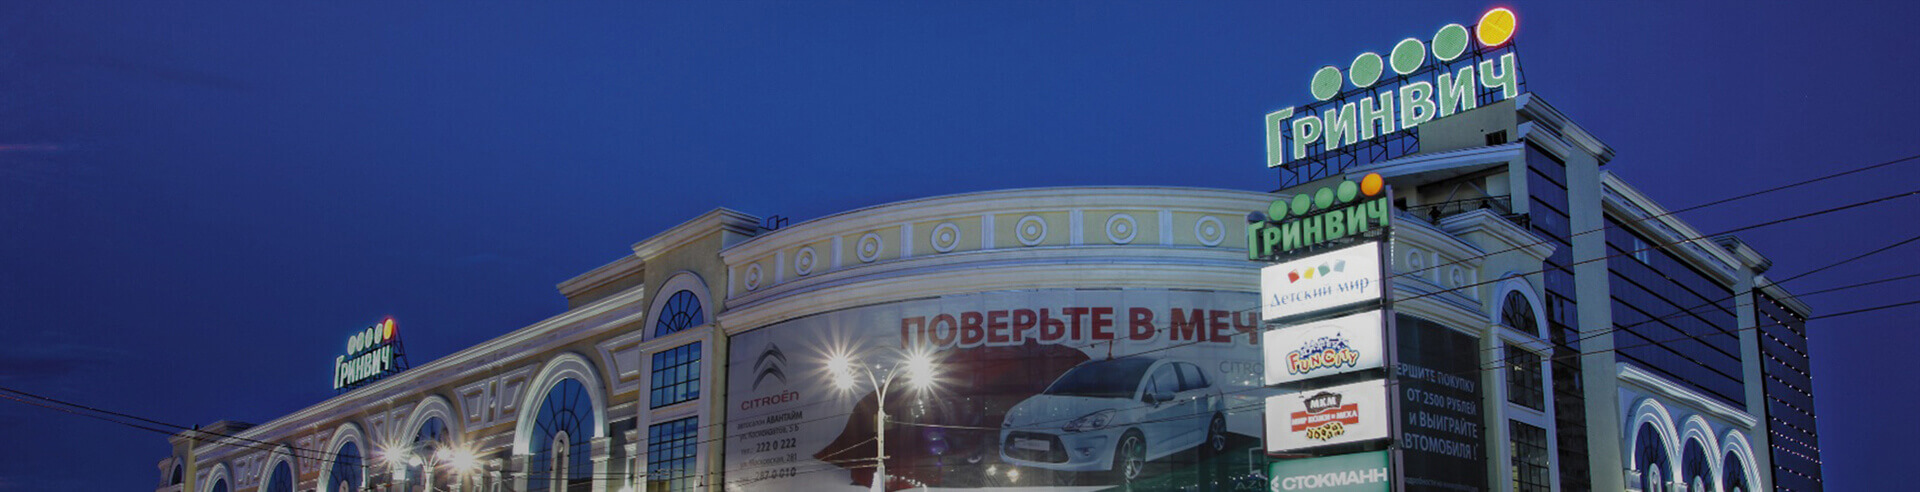 ТРЦ Гринвич, Екатеринбург